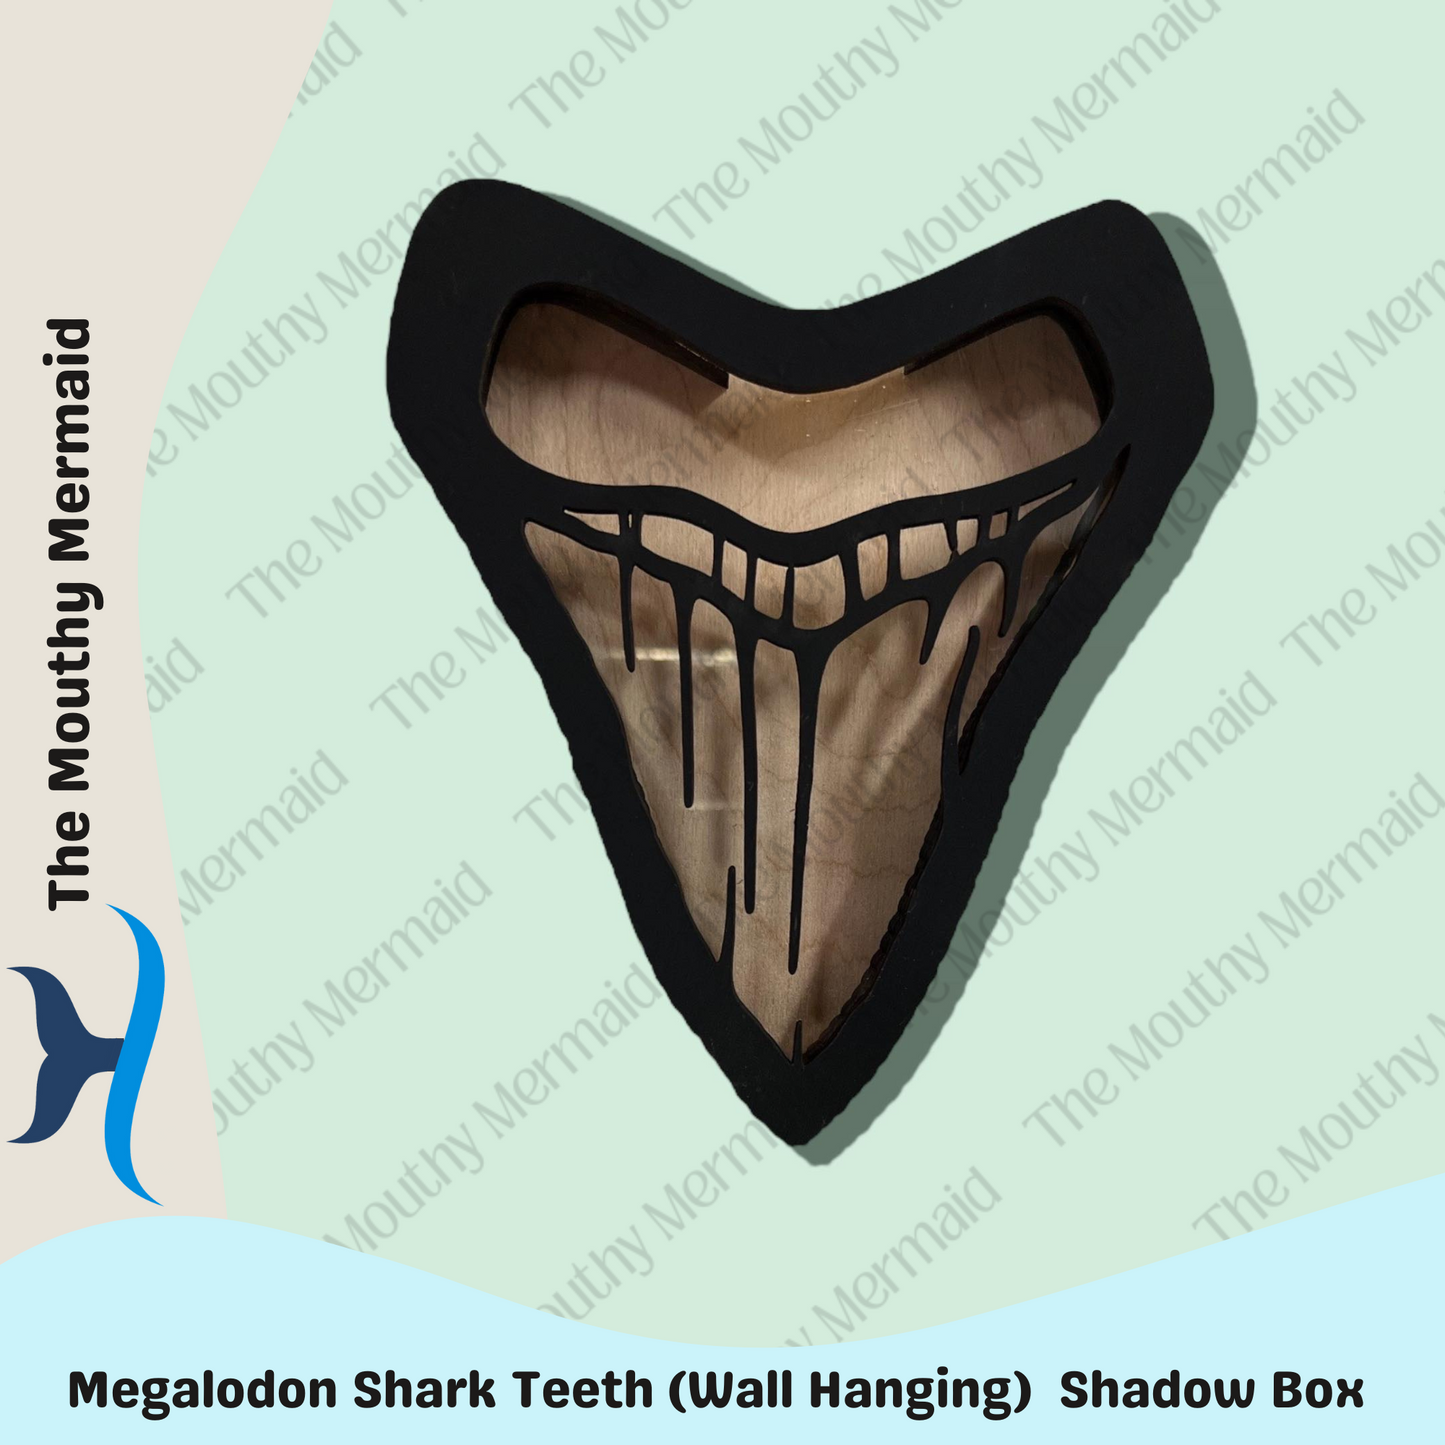 Shark tooth MEGALODON (WALL HANGING) Shadow Box Display